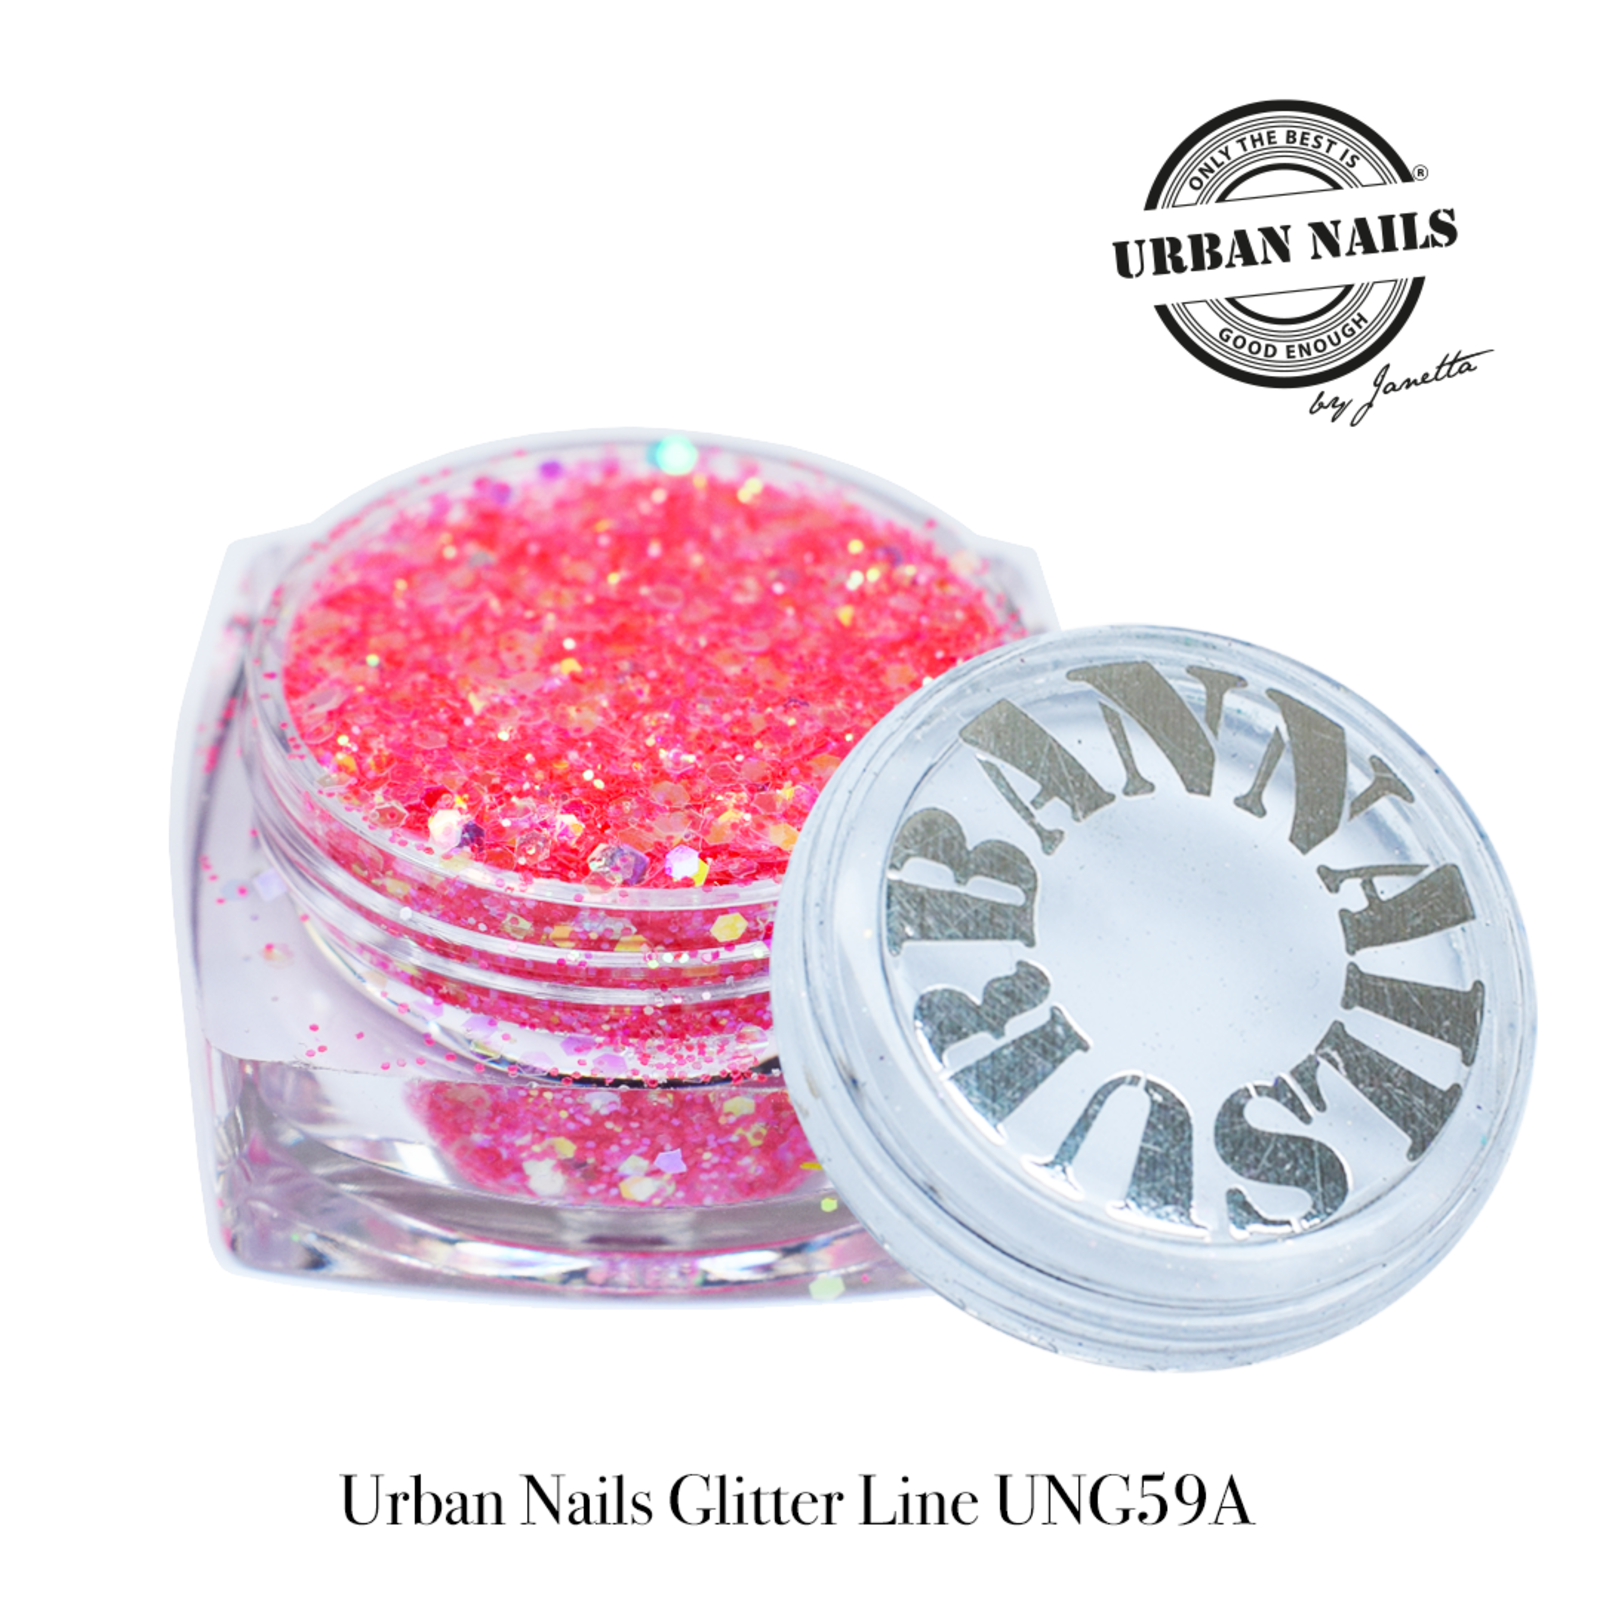 Urban nails Glitter Line UNG59-A